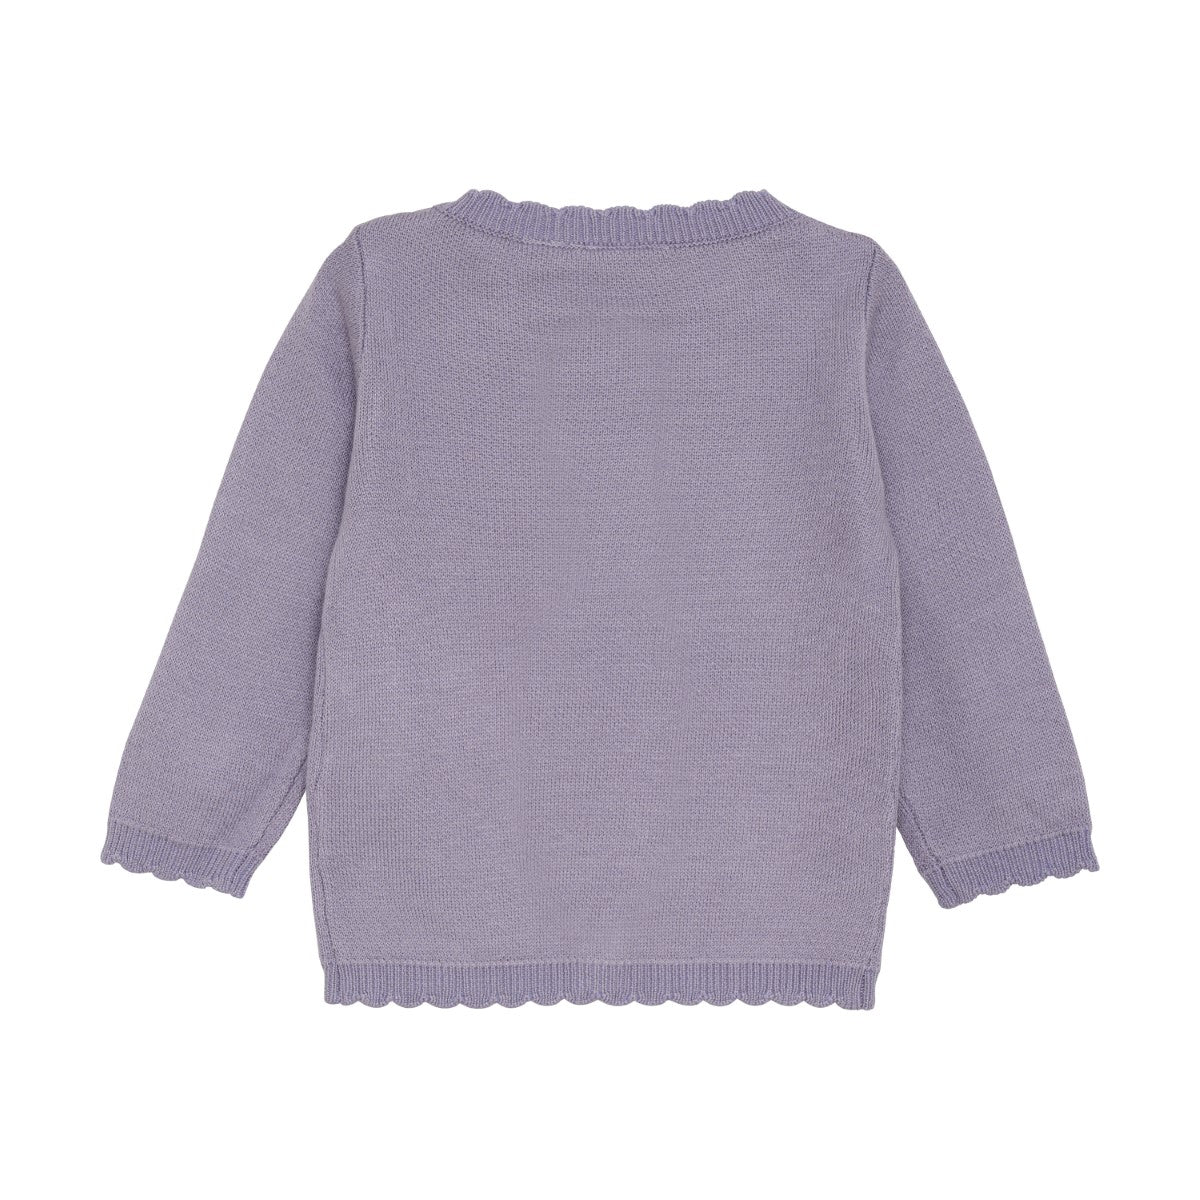 Knit Cardigan - Lavender Grey